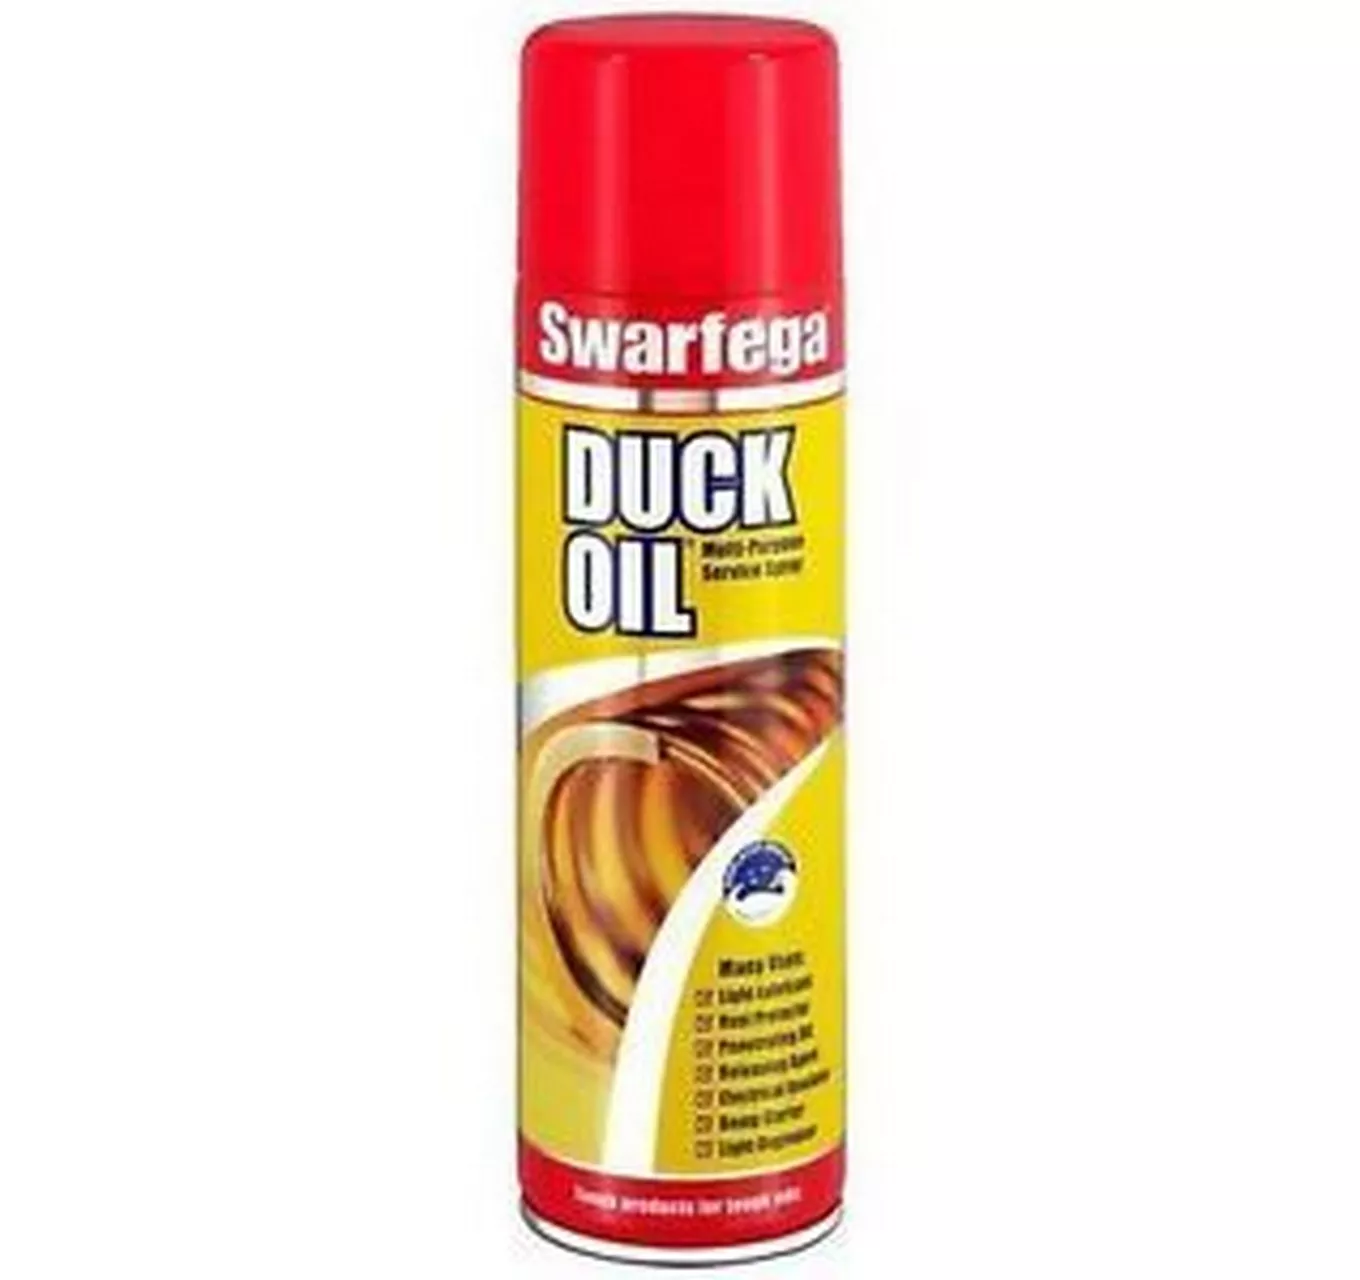 Duck Oil Spray 500ml